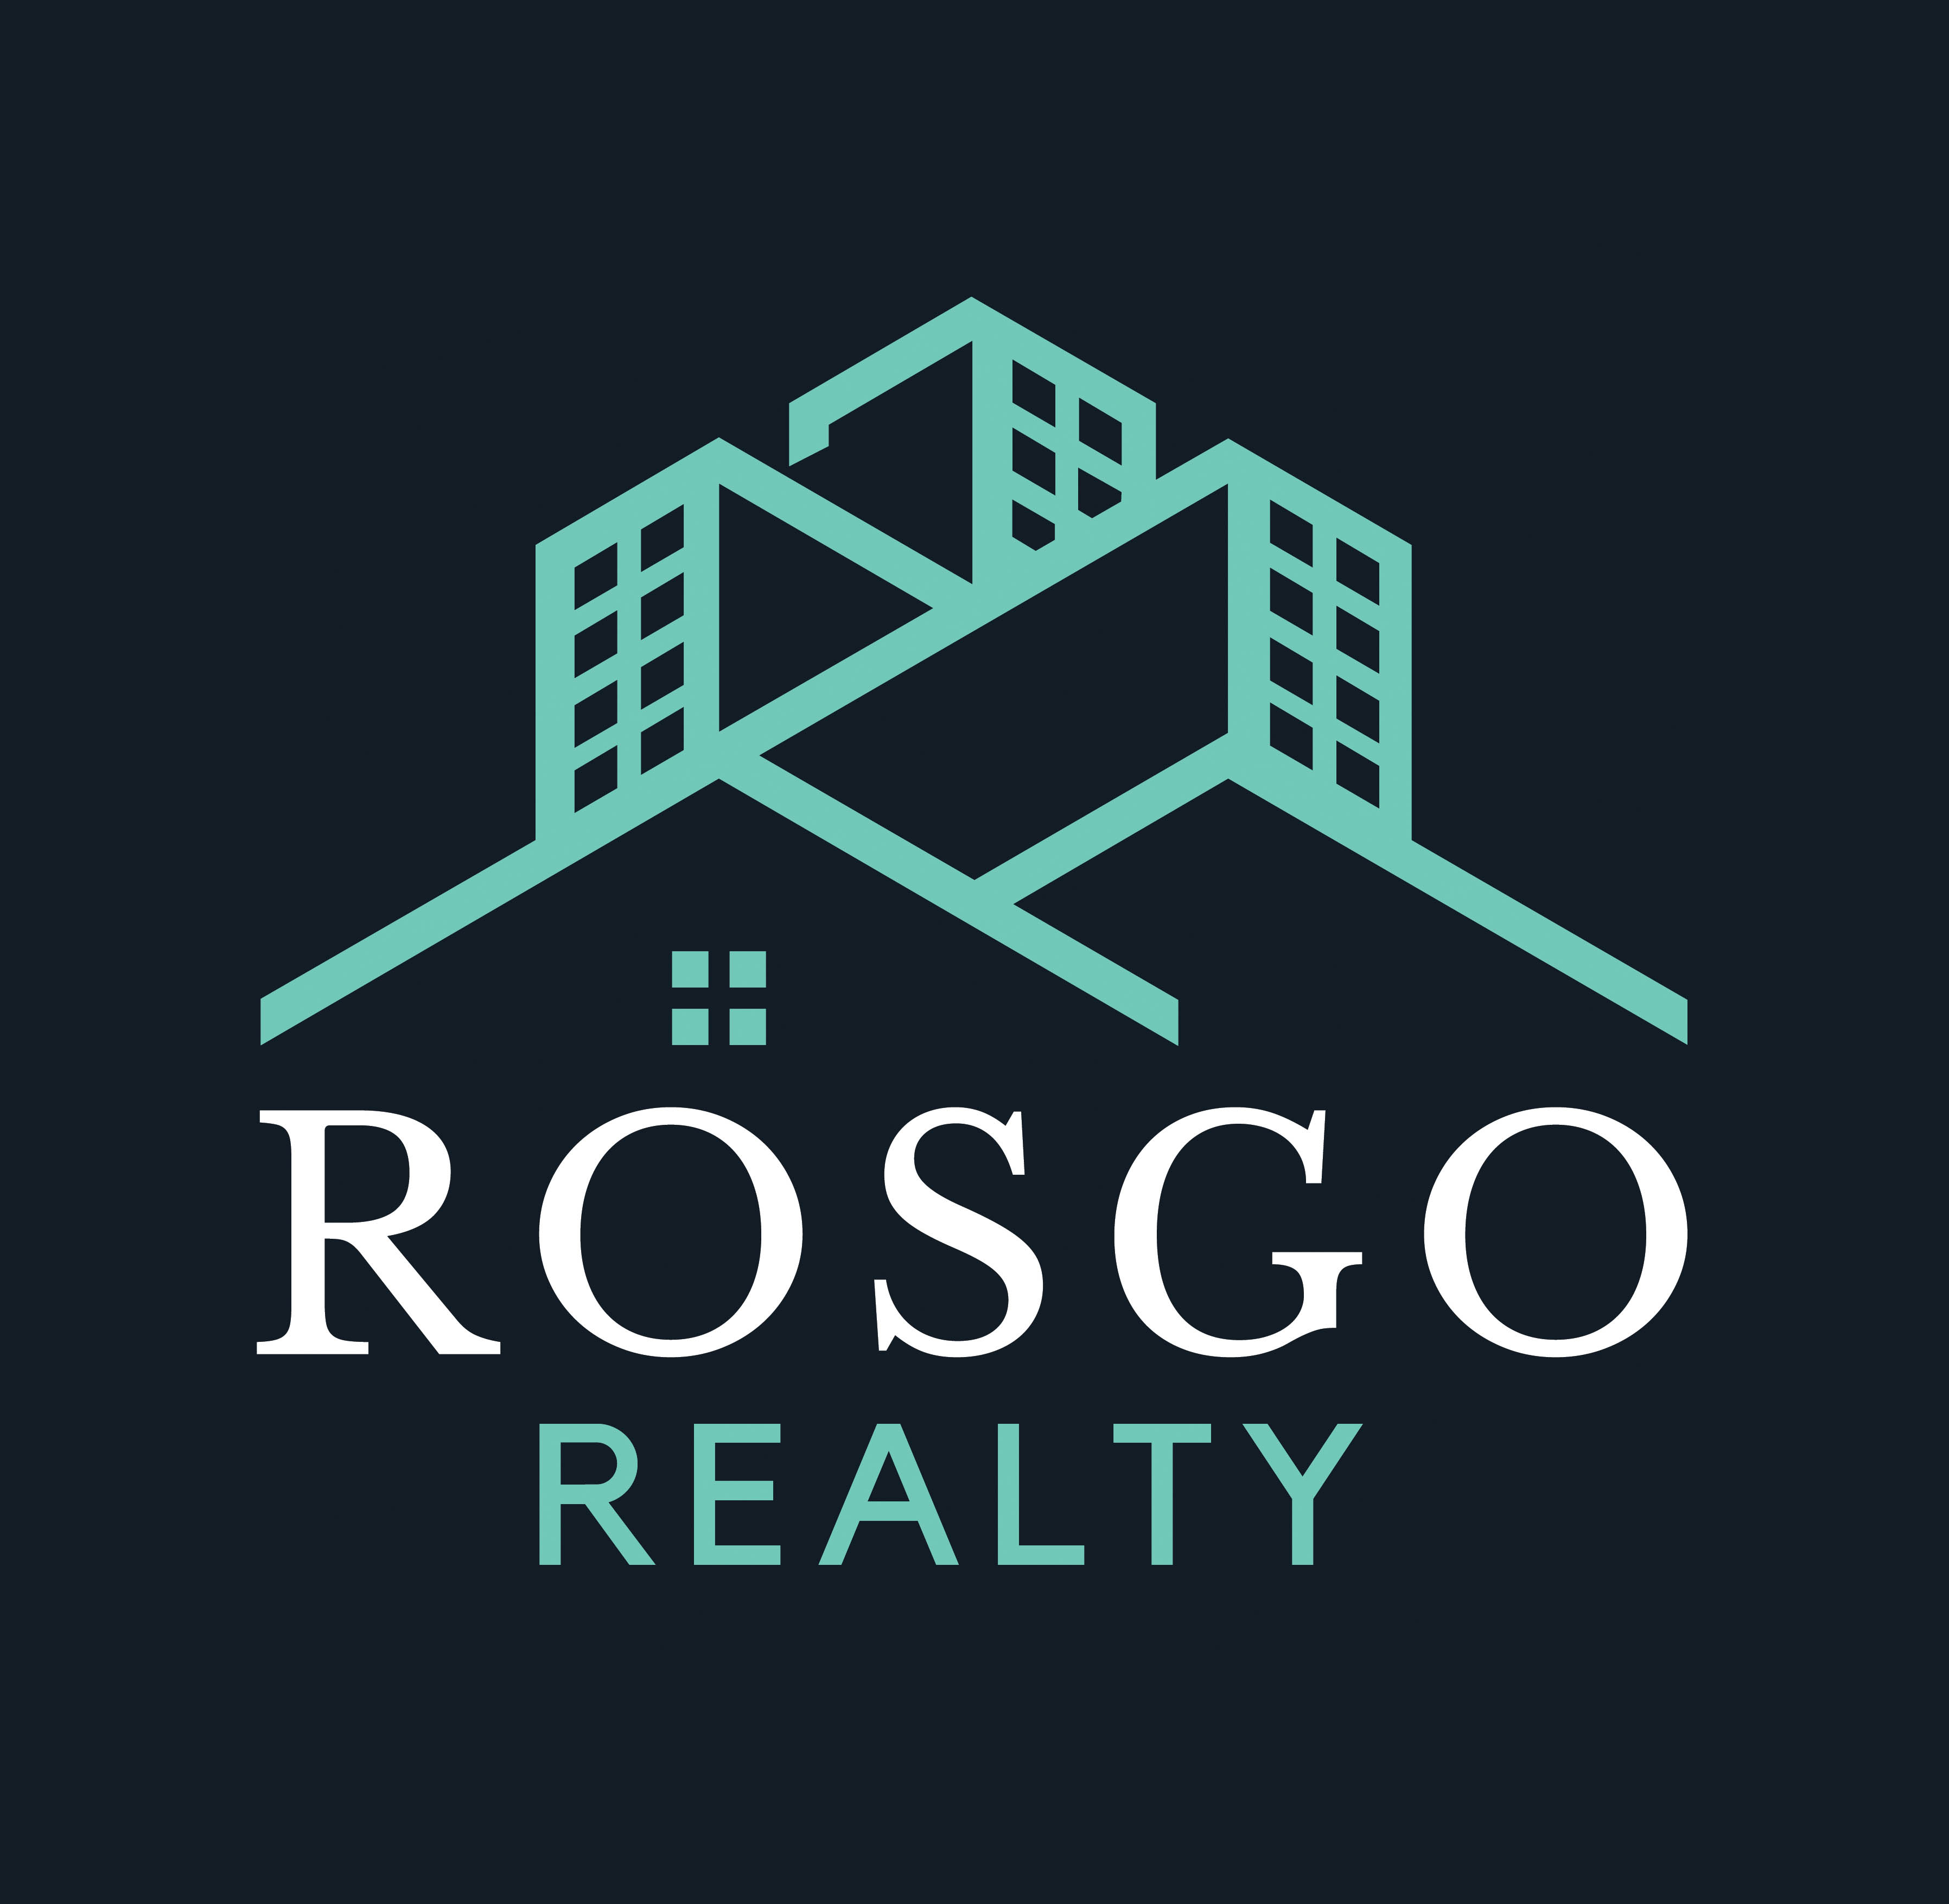 Rosgo Realty